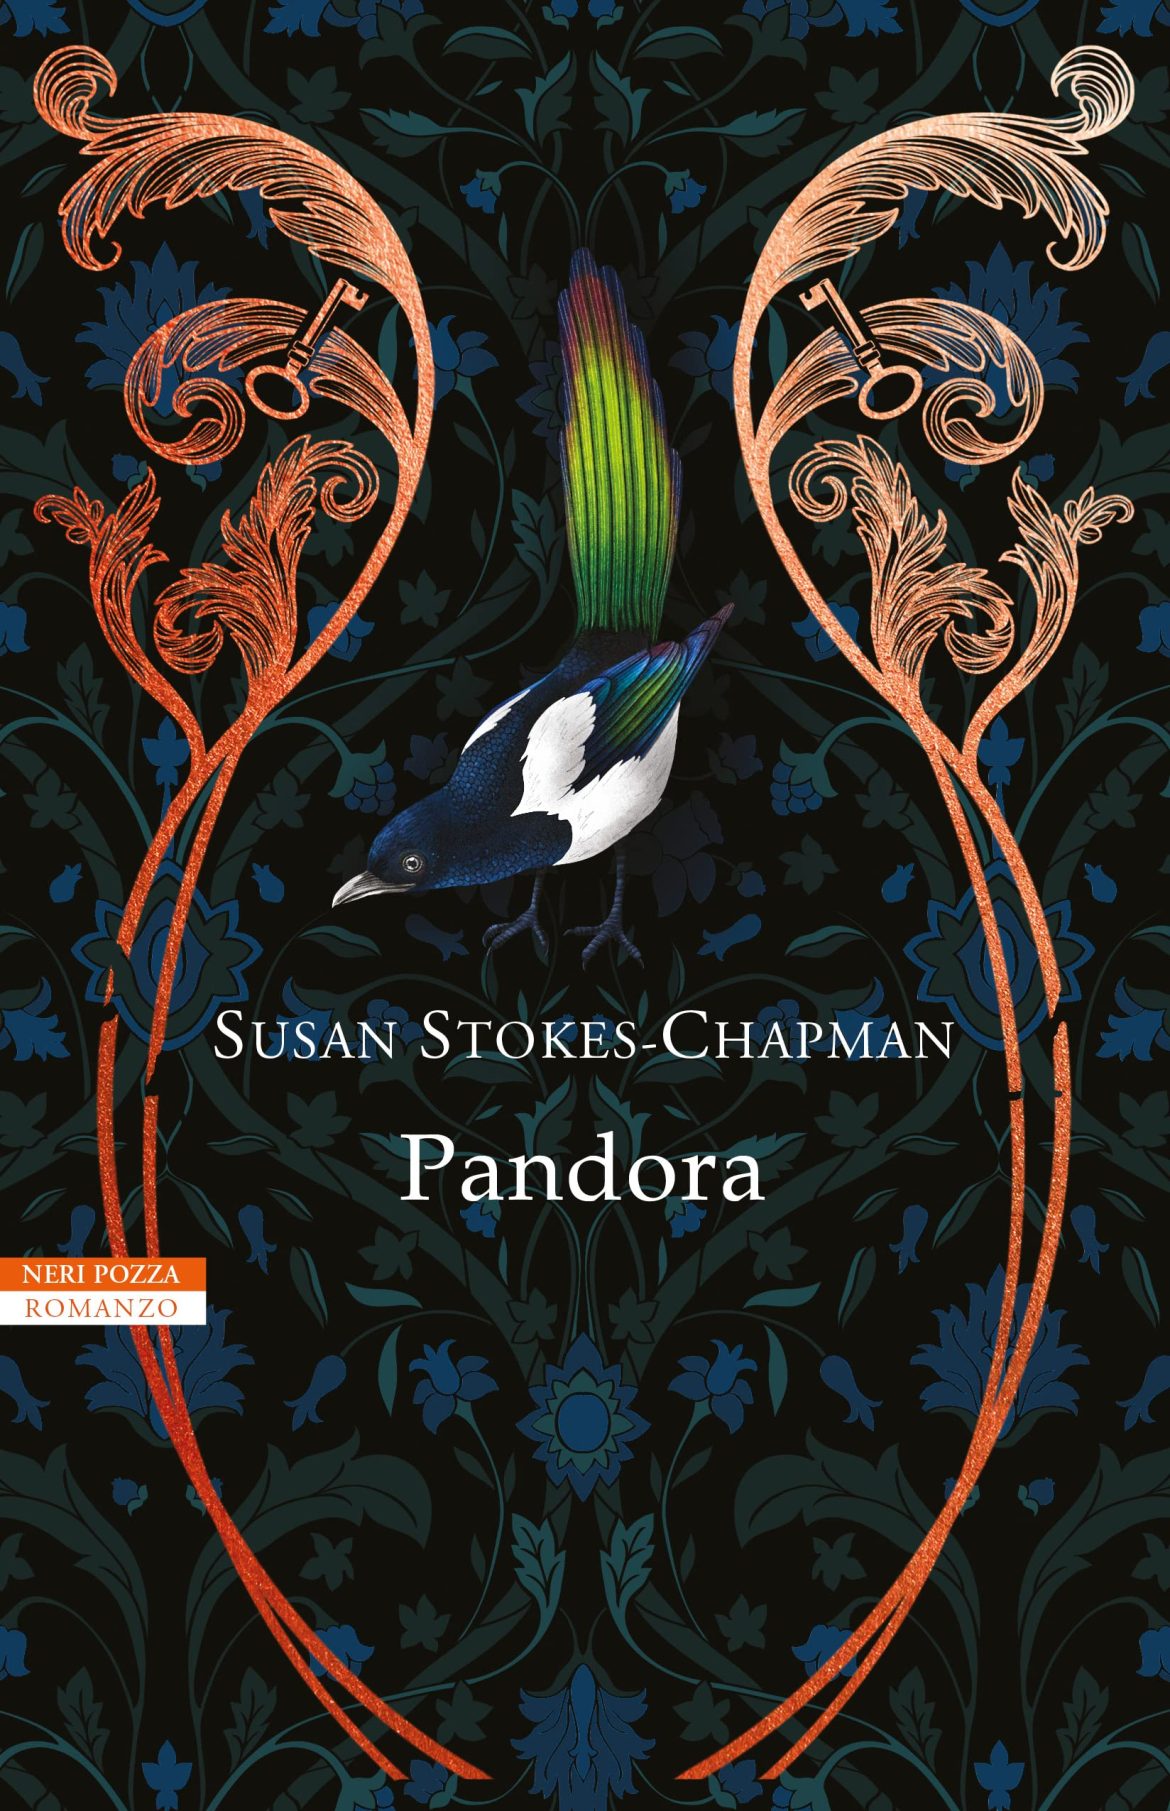 Recensione di Pandora – Susan Stokes-Chapman